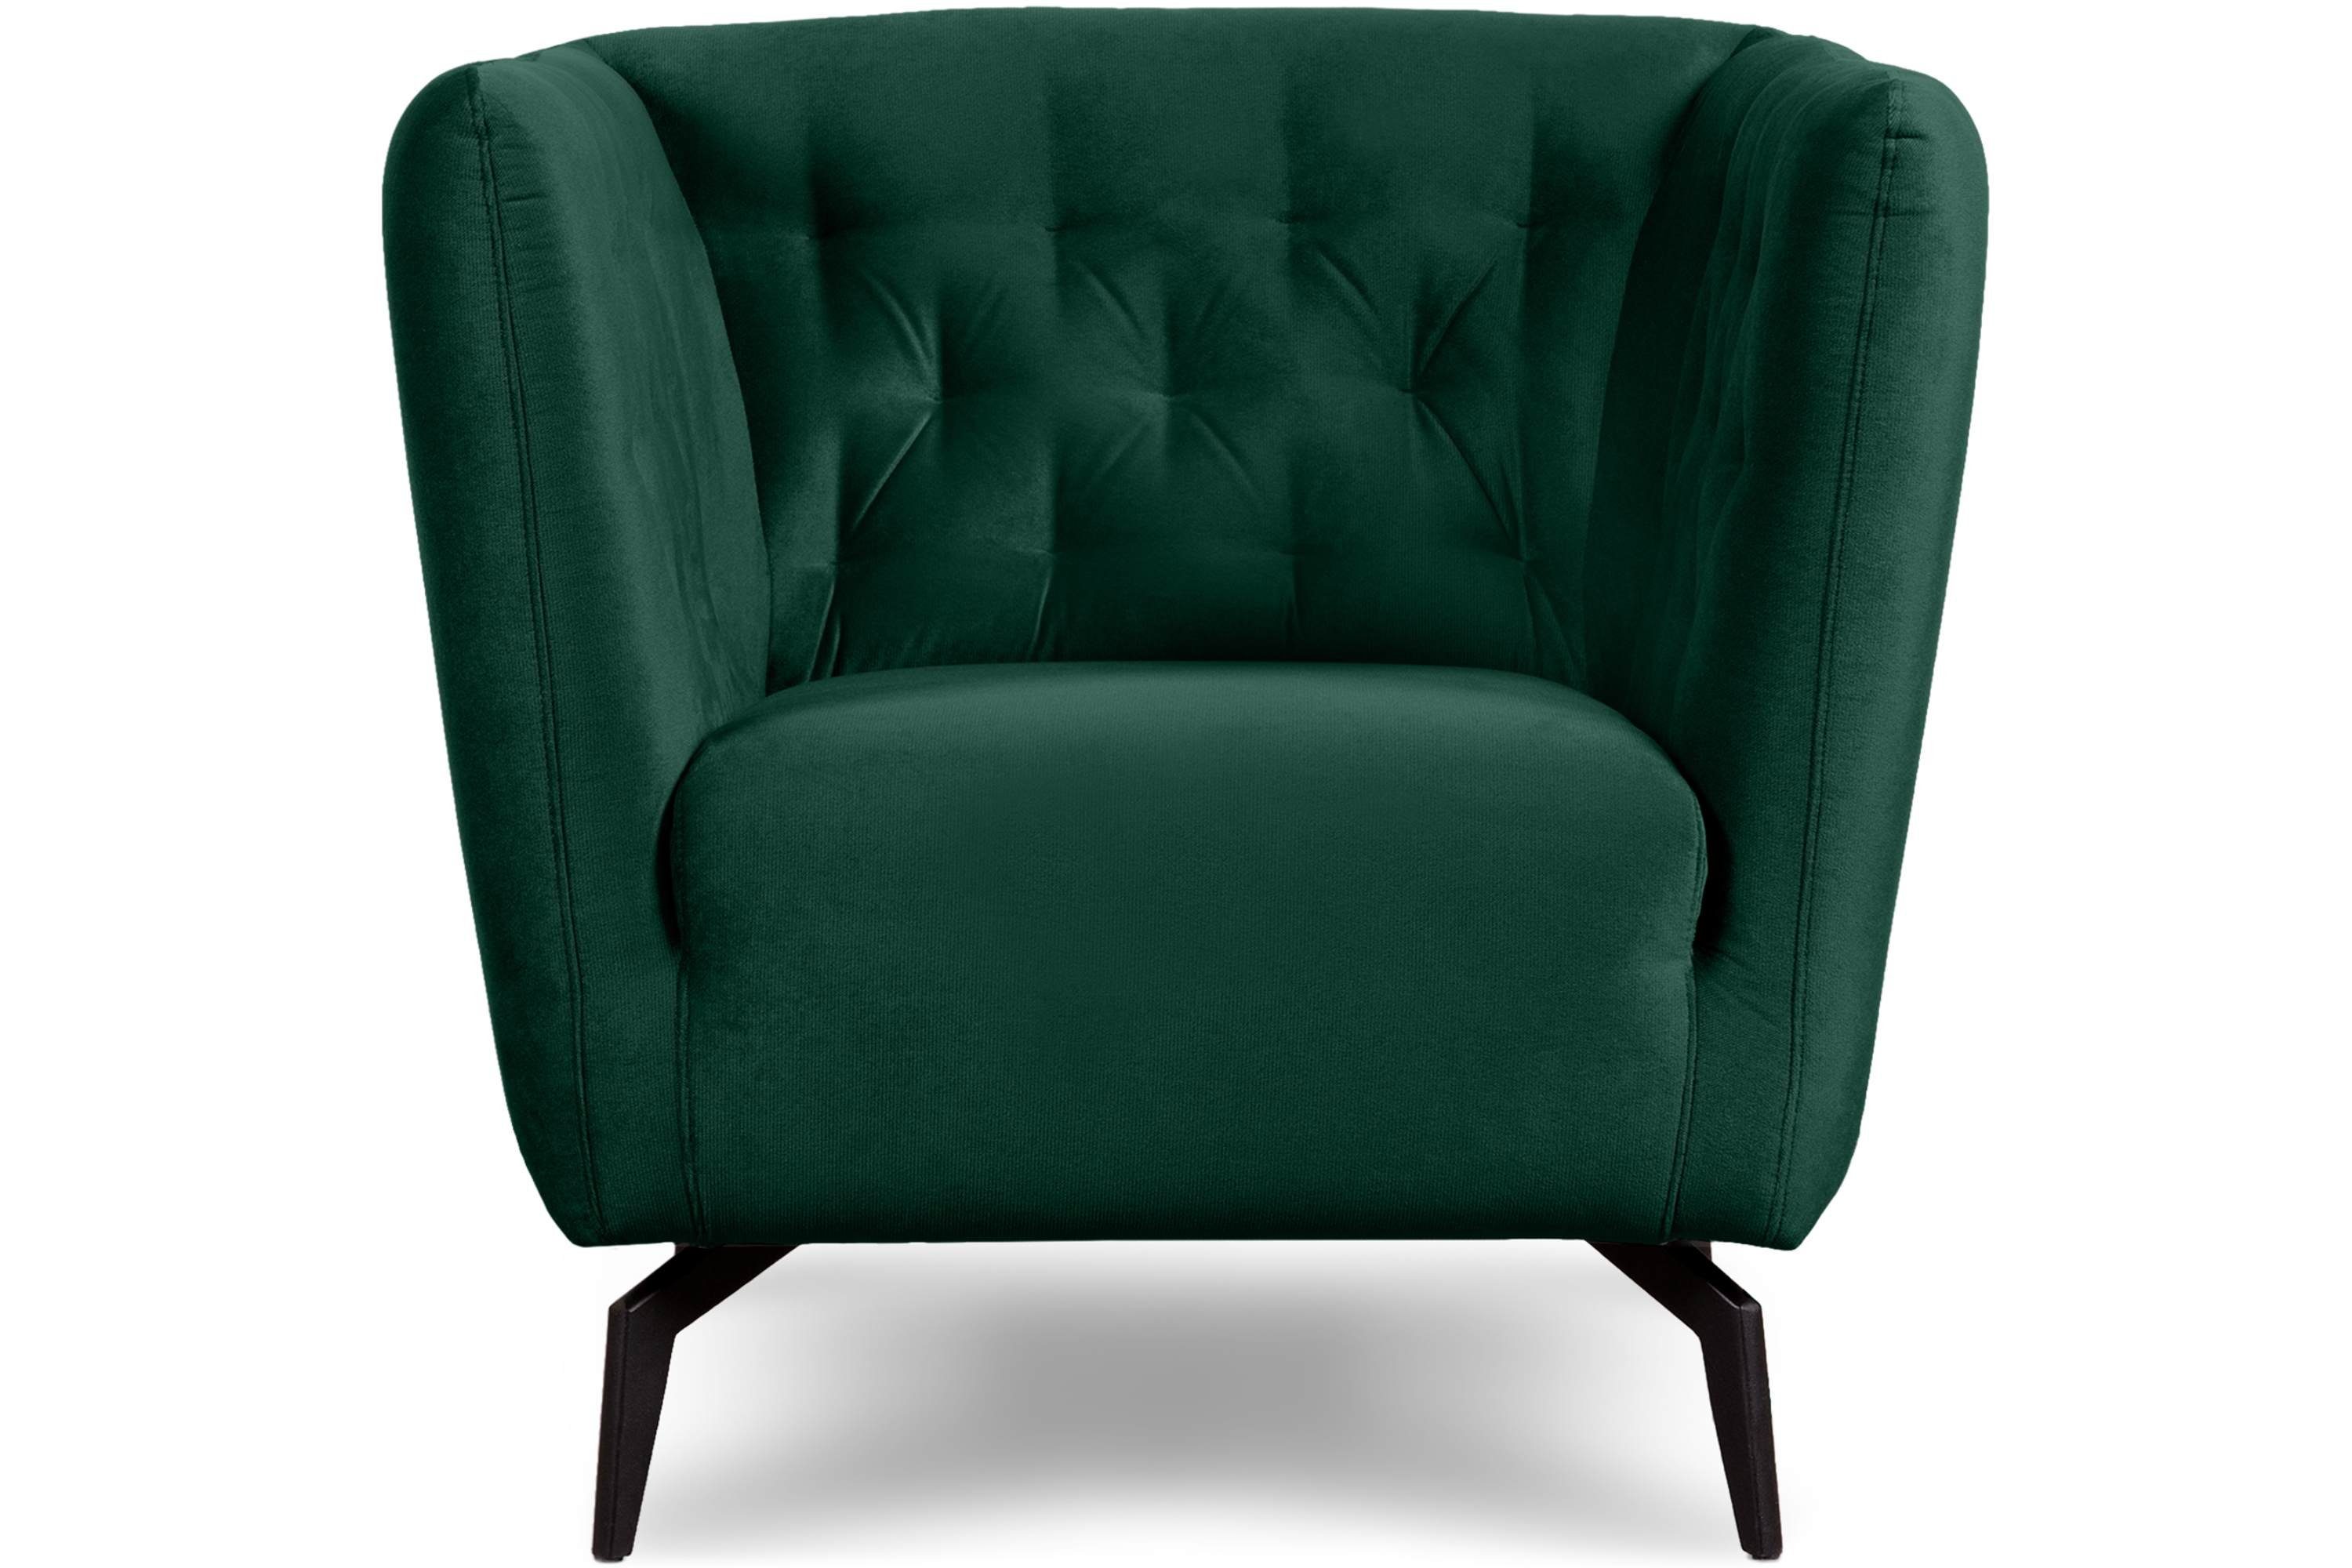 Schaumstoff Metallfüßen, dunkelgrün dunkelgrün gewellte Gesteppter auf | und Sitz im Feder CORDI Sessel Sessel, hohen Konsimo